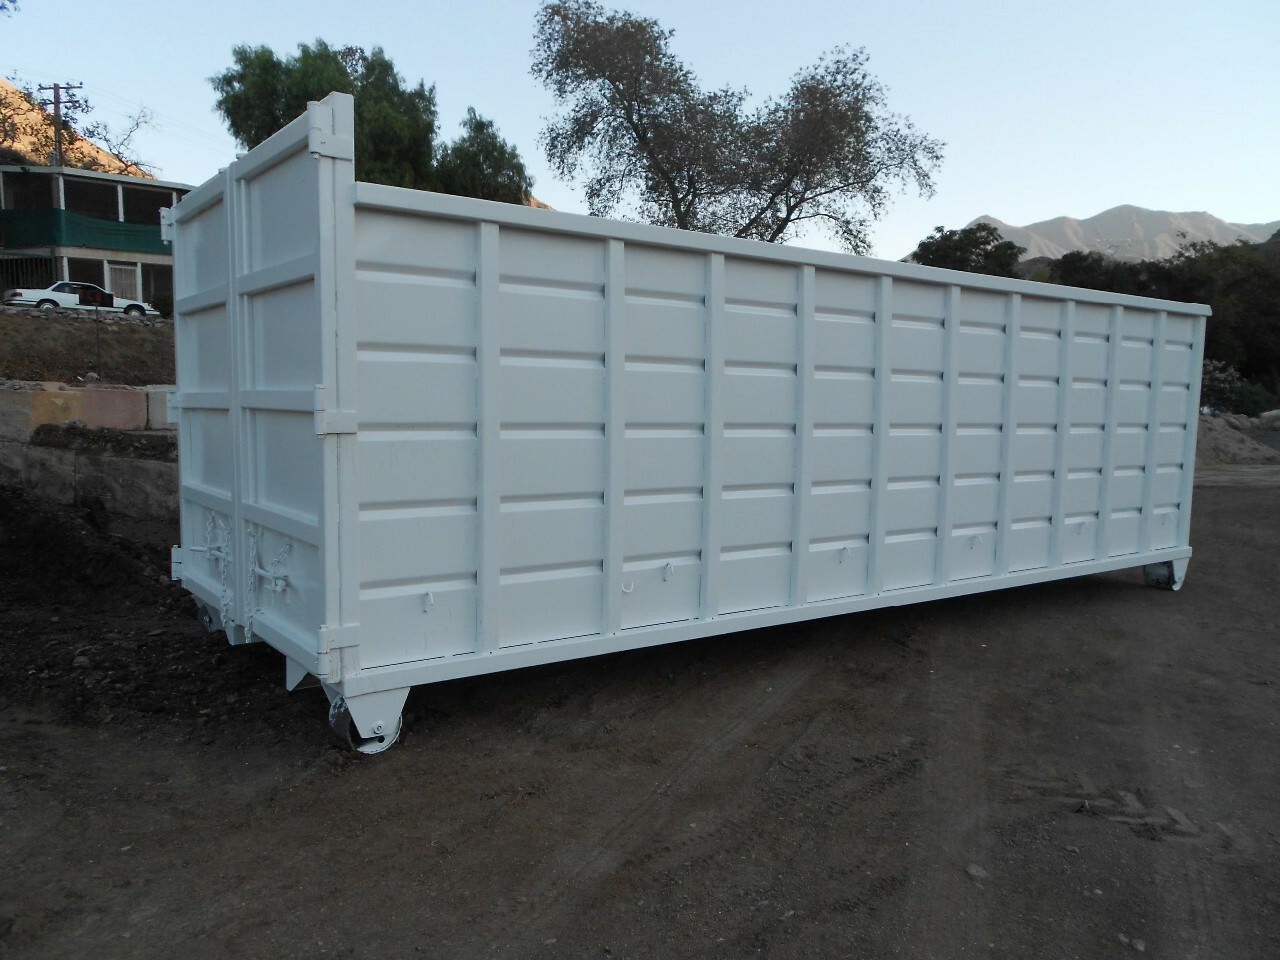 Construction dumpster rental in Riverside County, CA